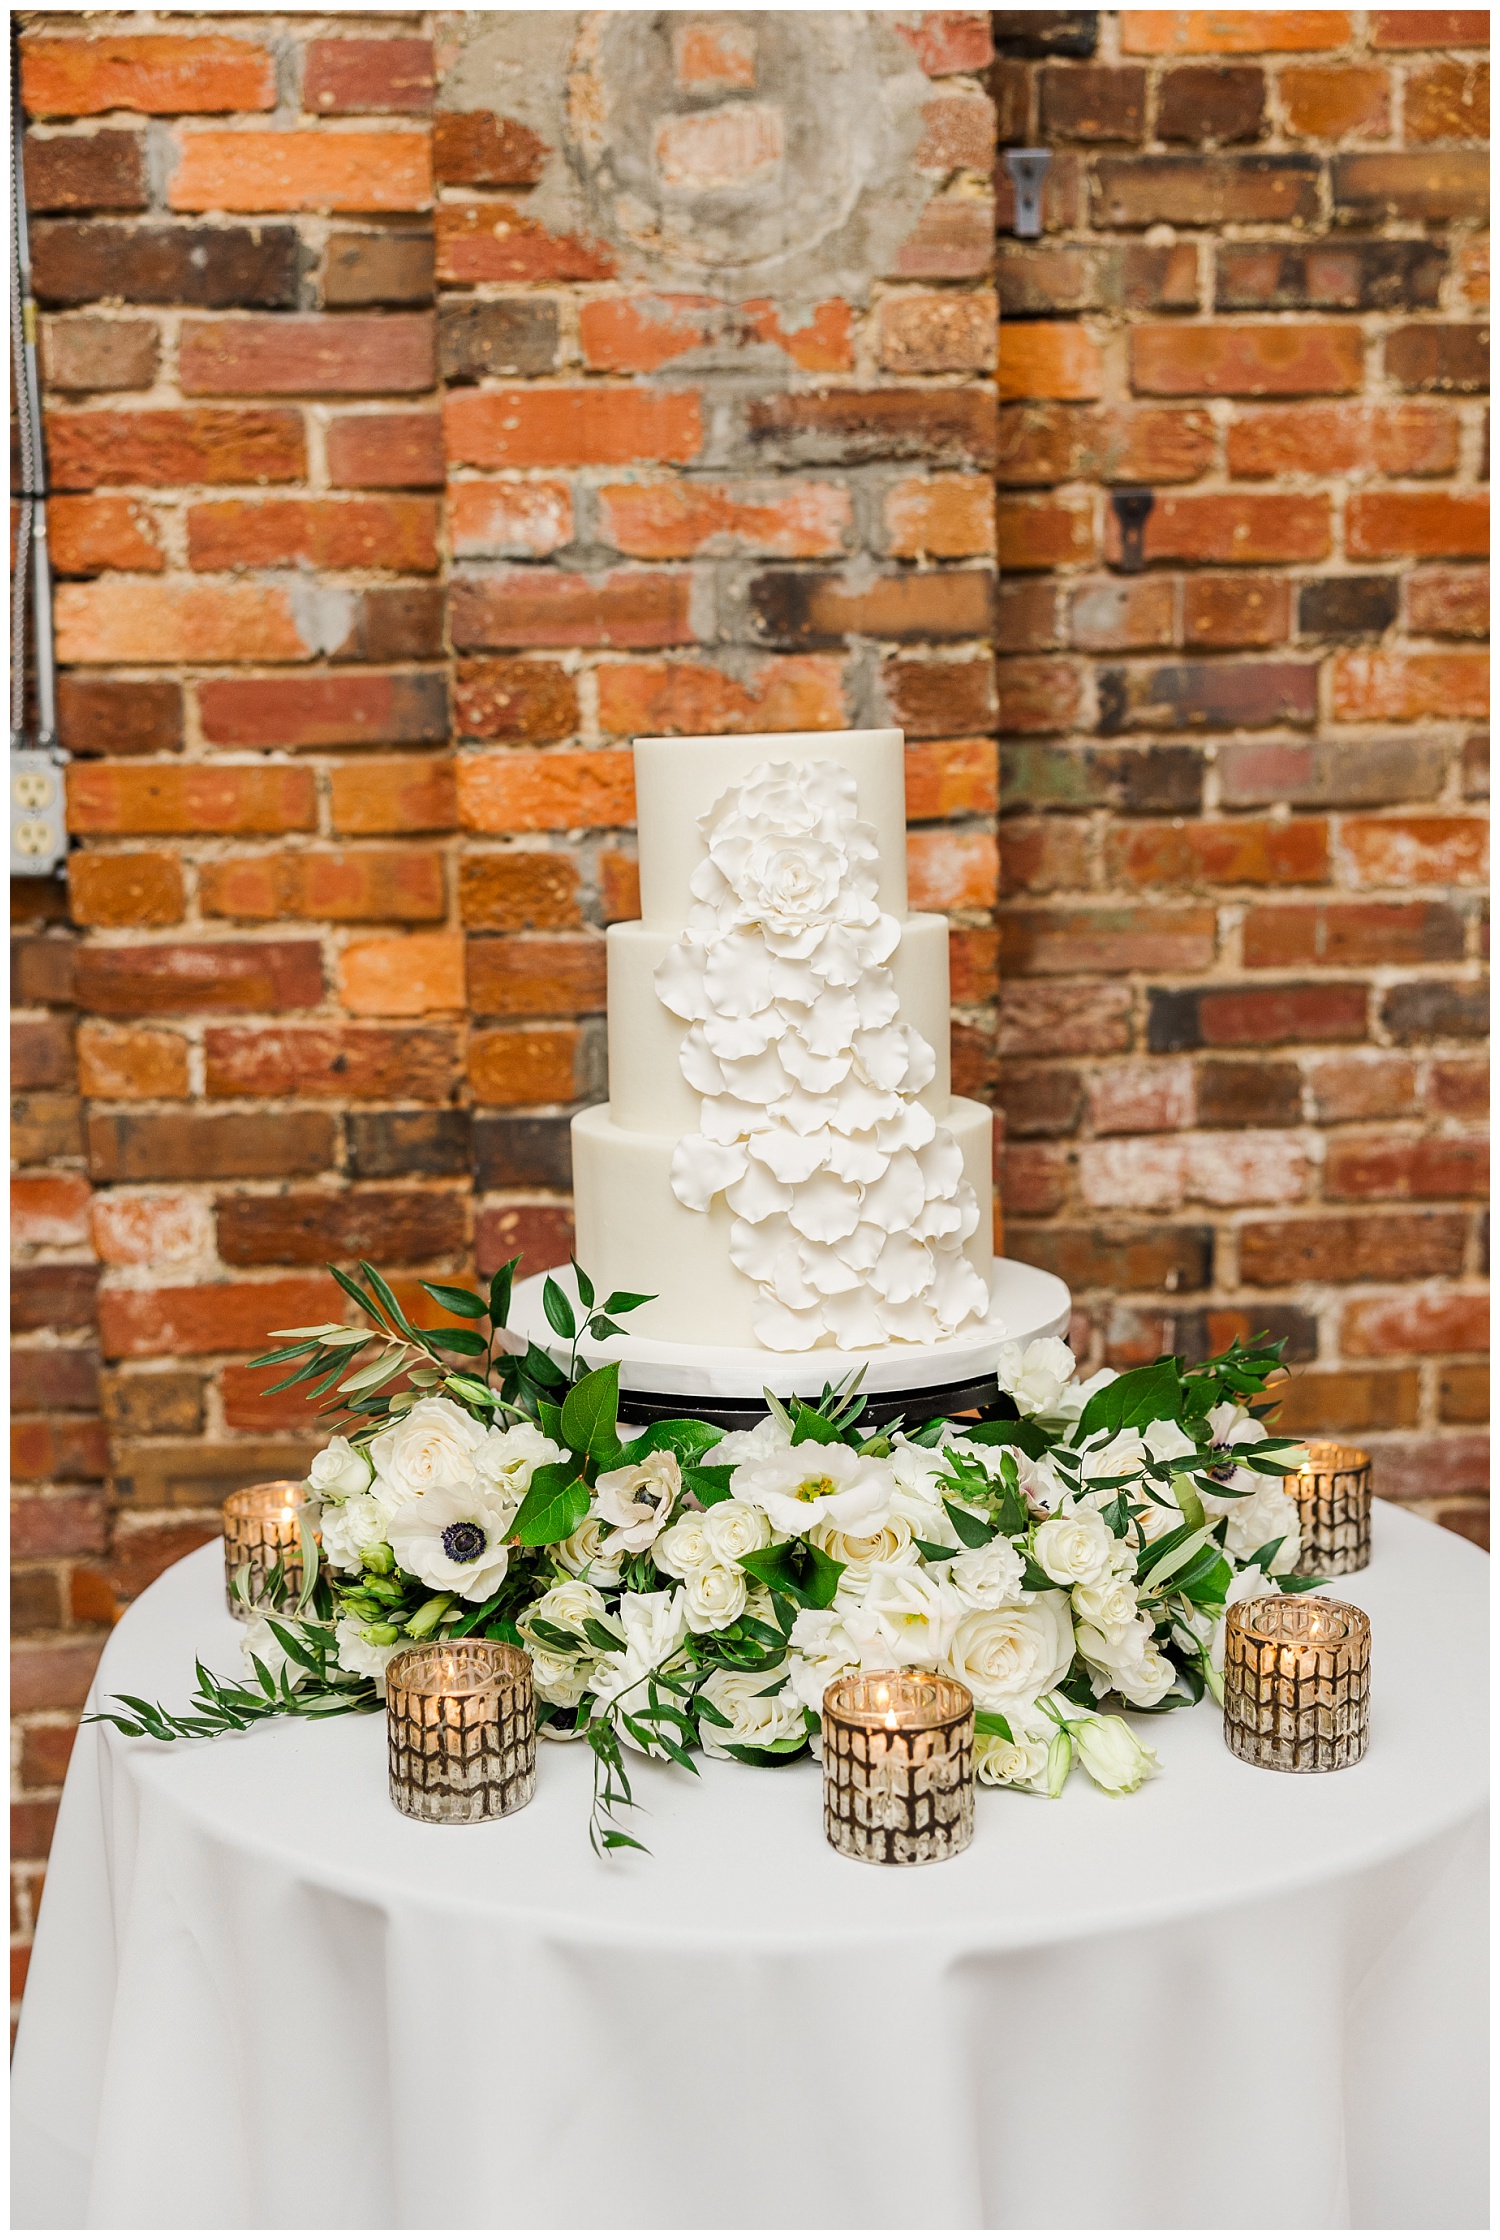 wedding cake against a brick wall at winter wedding reception